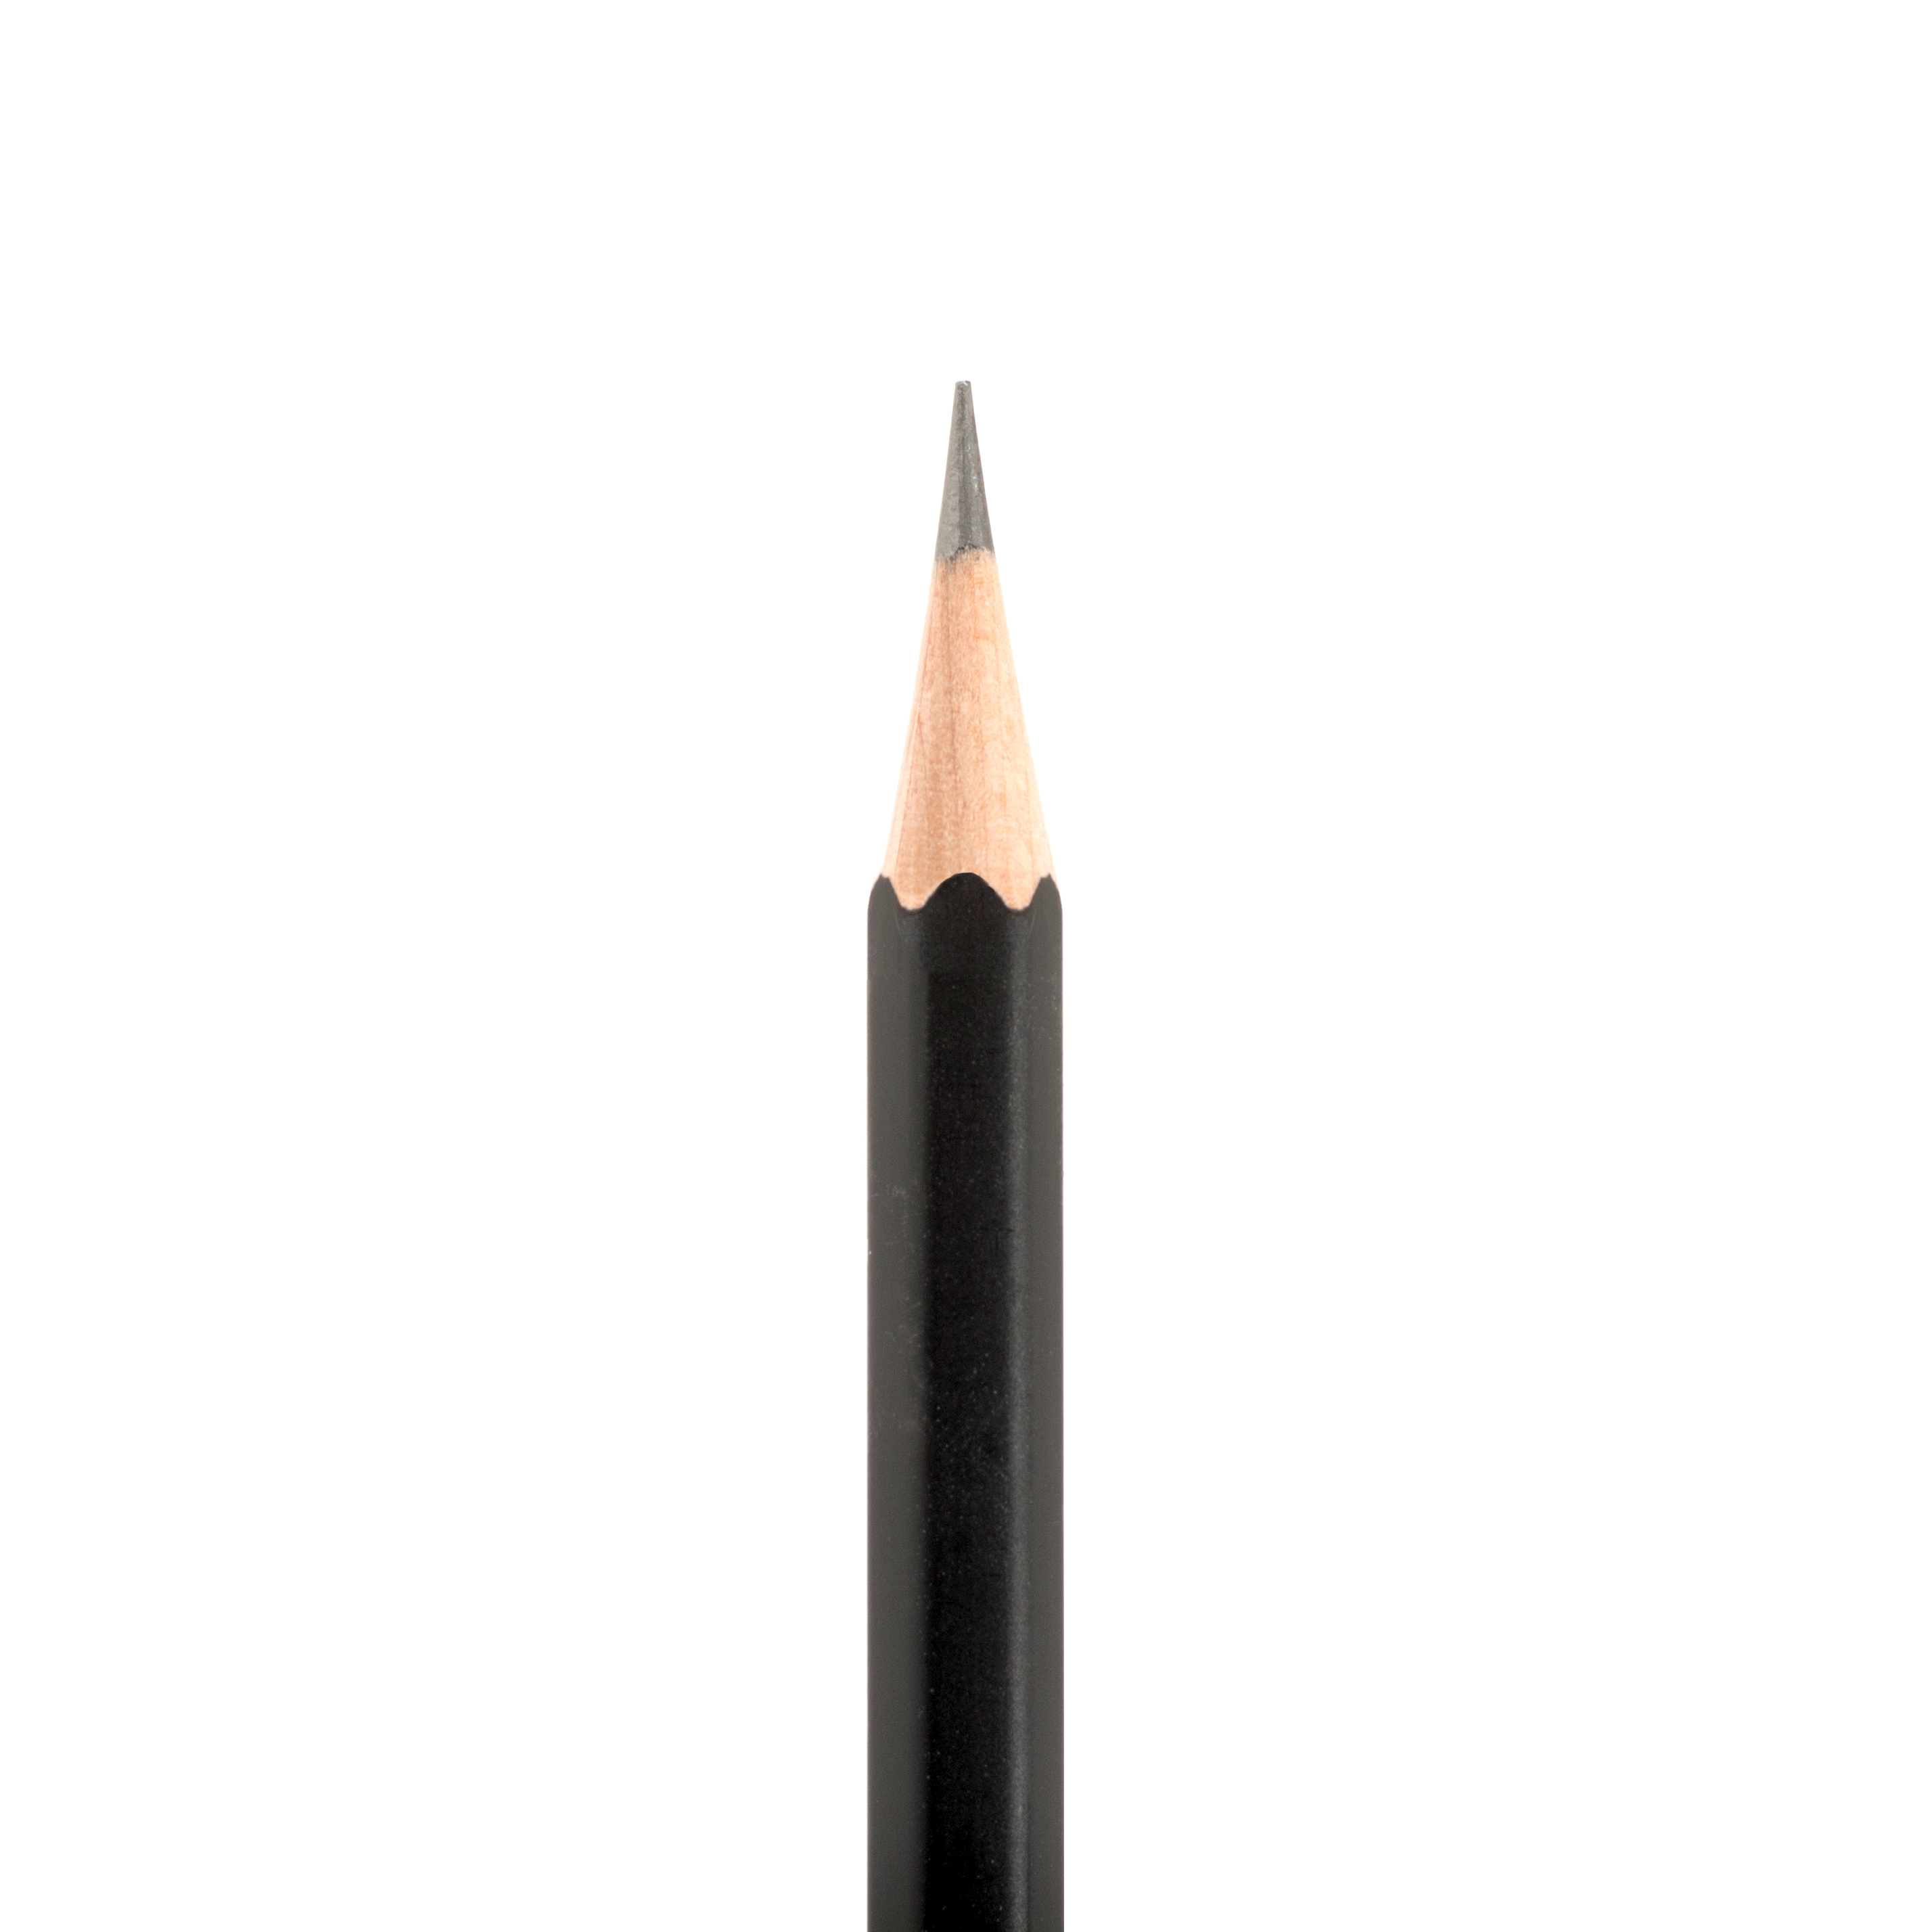 3 Rare Pencils - Retired Palomino Blackwing Original, Pearl, 602 w